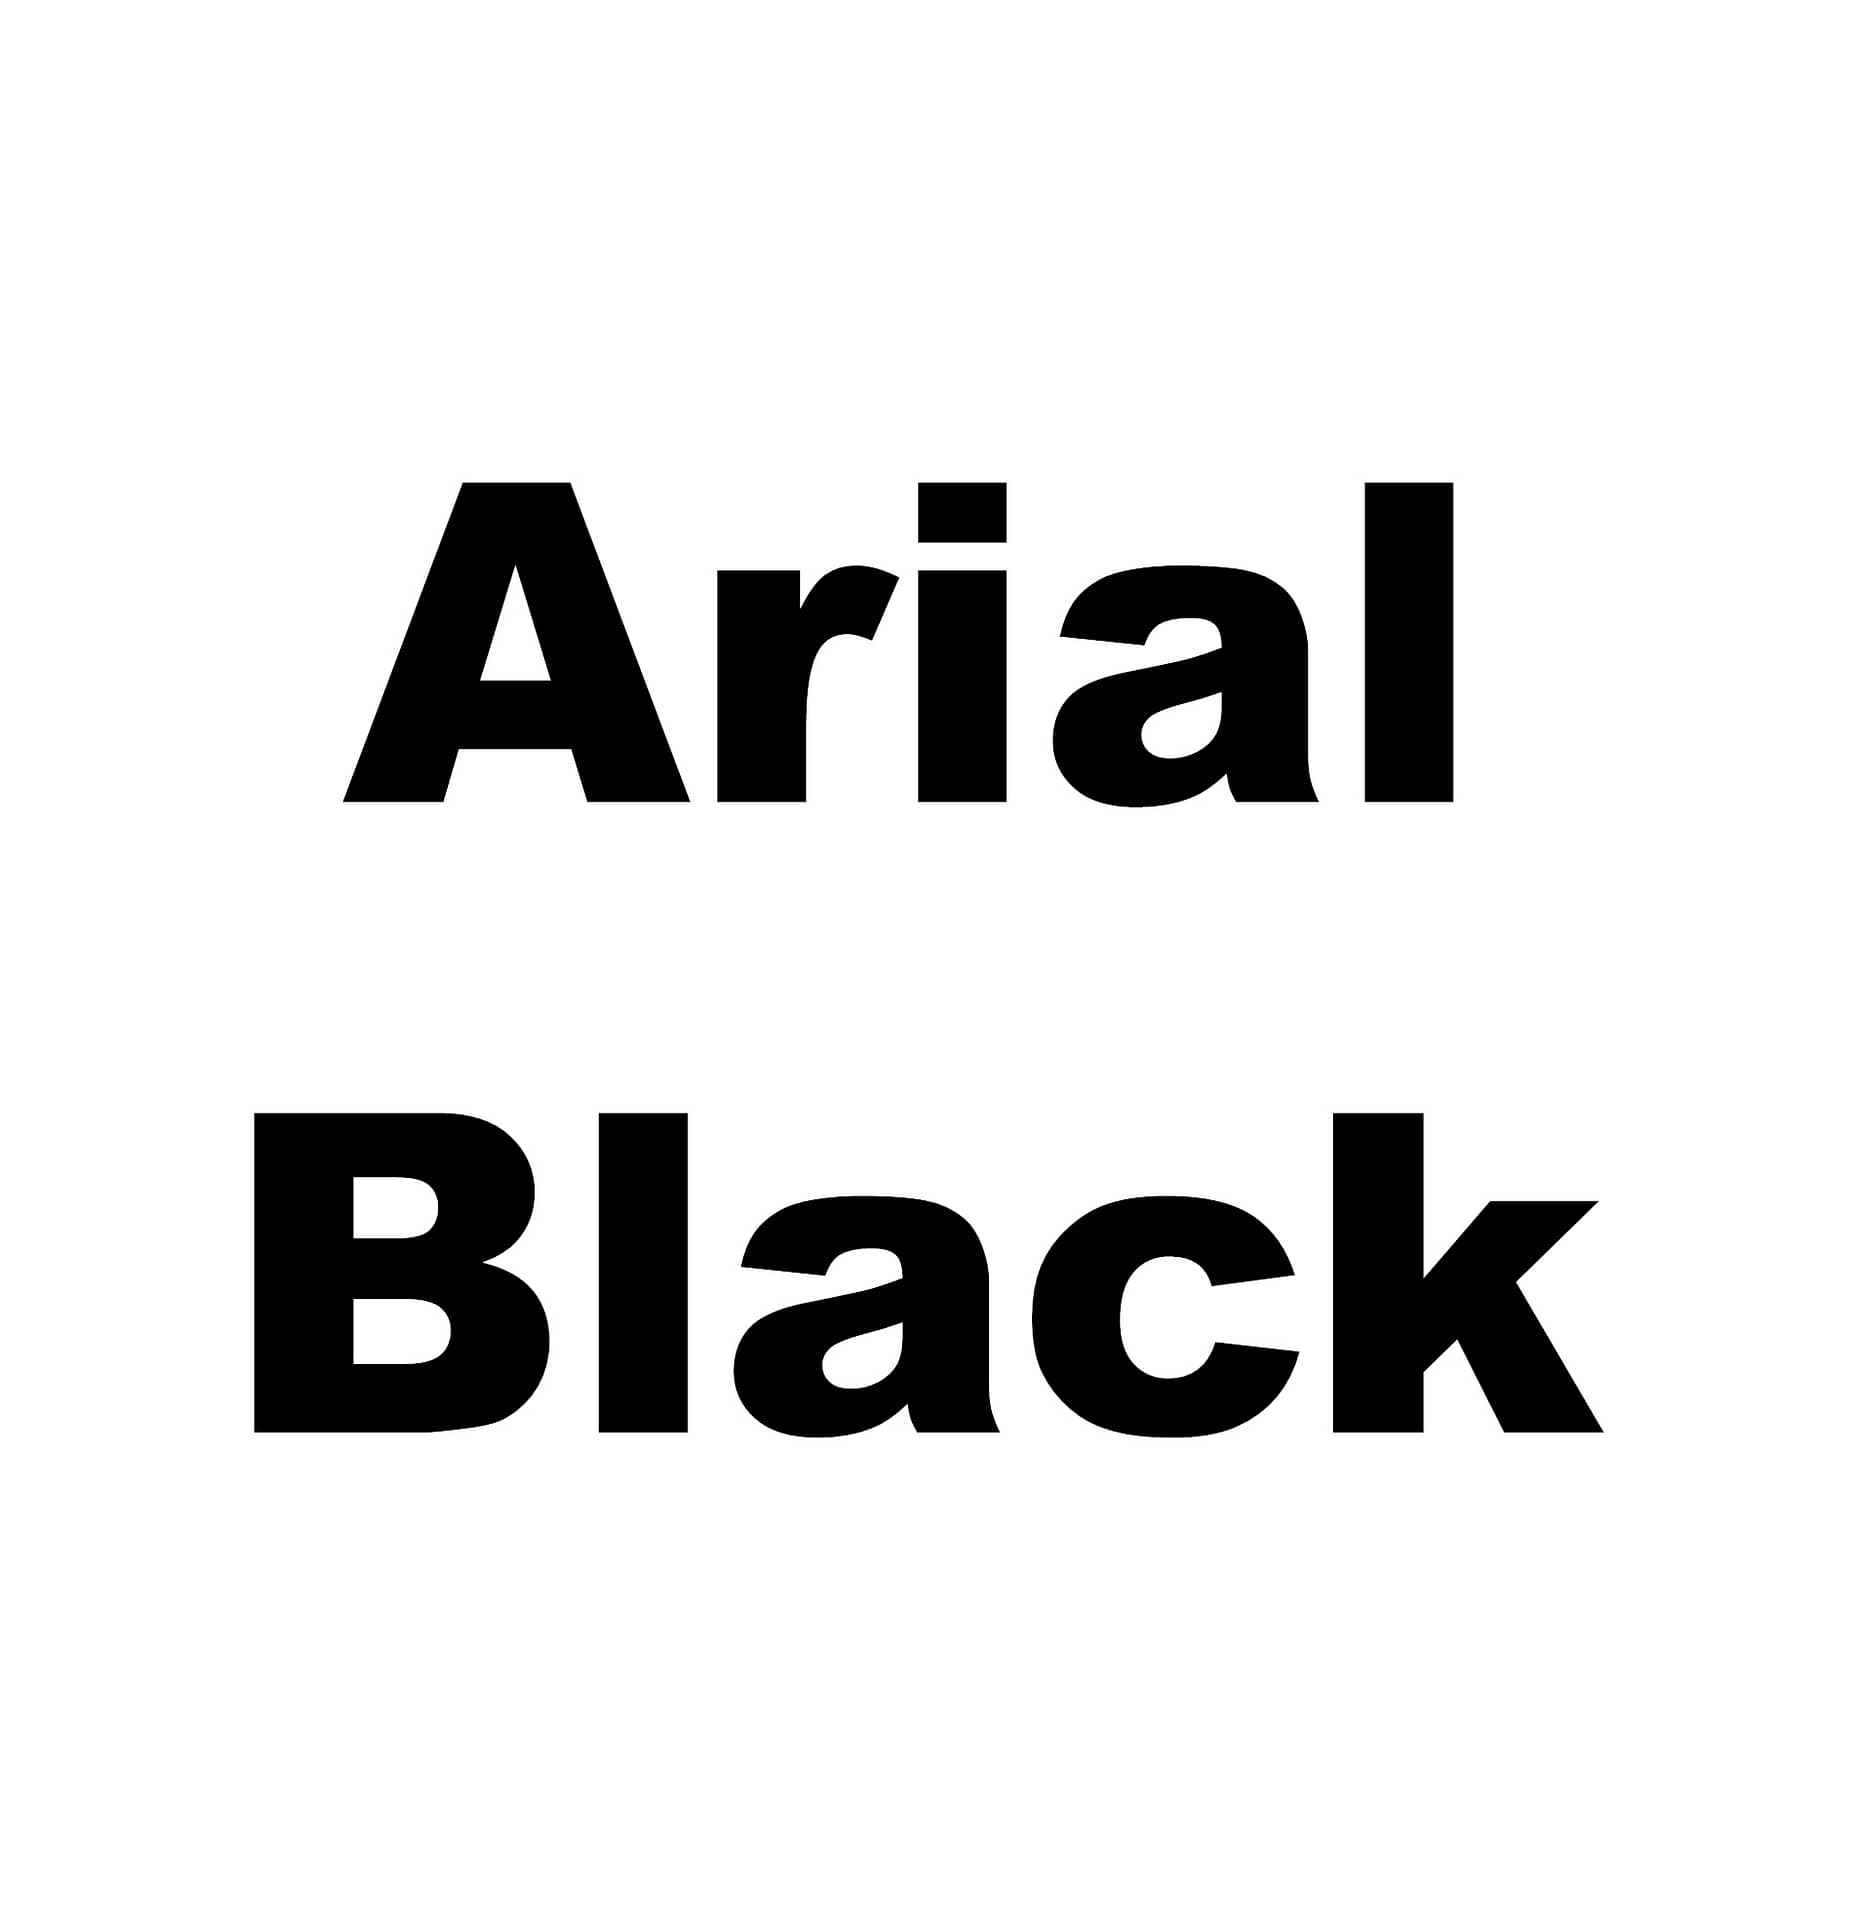 Arial Black $0.00